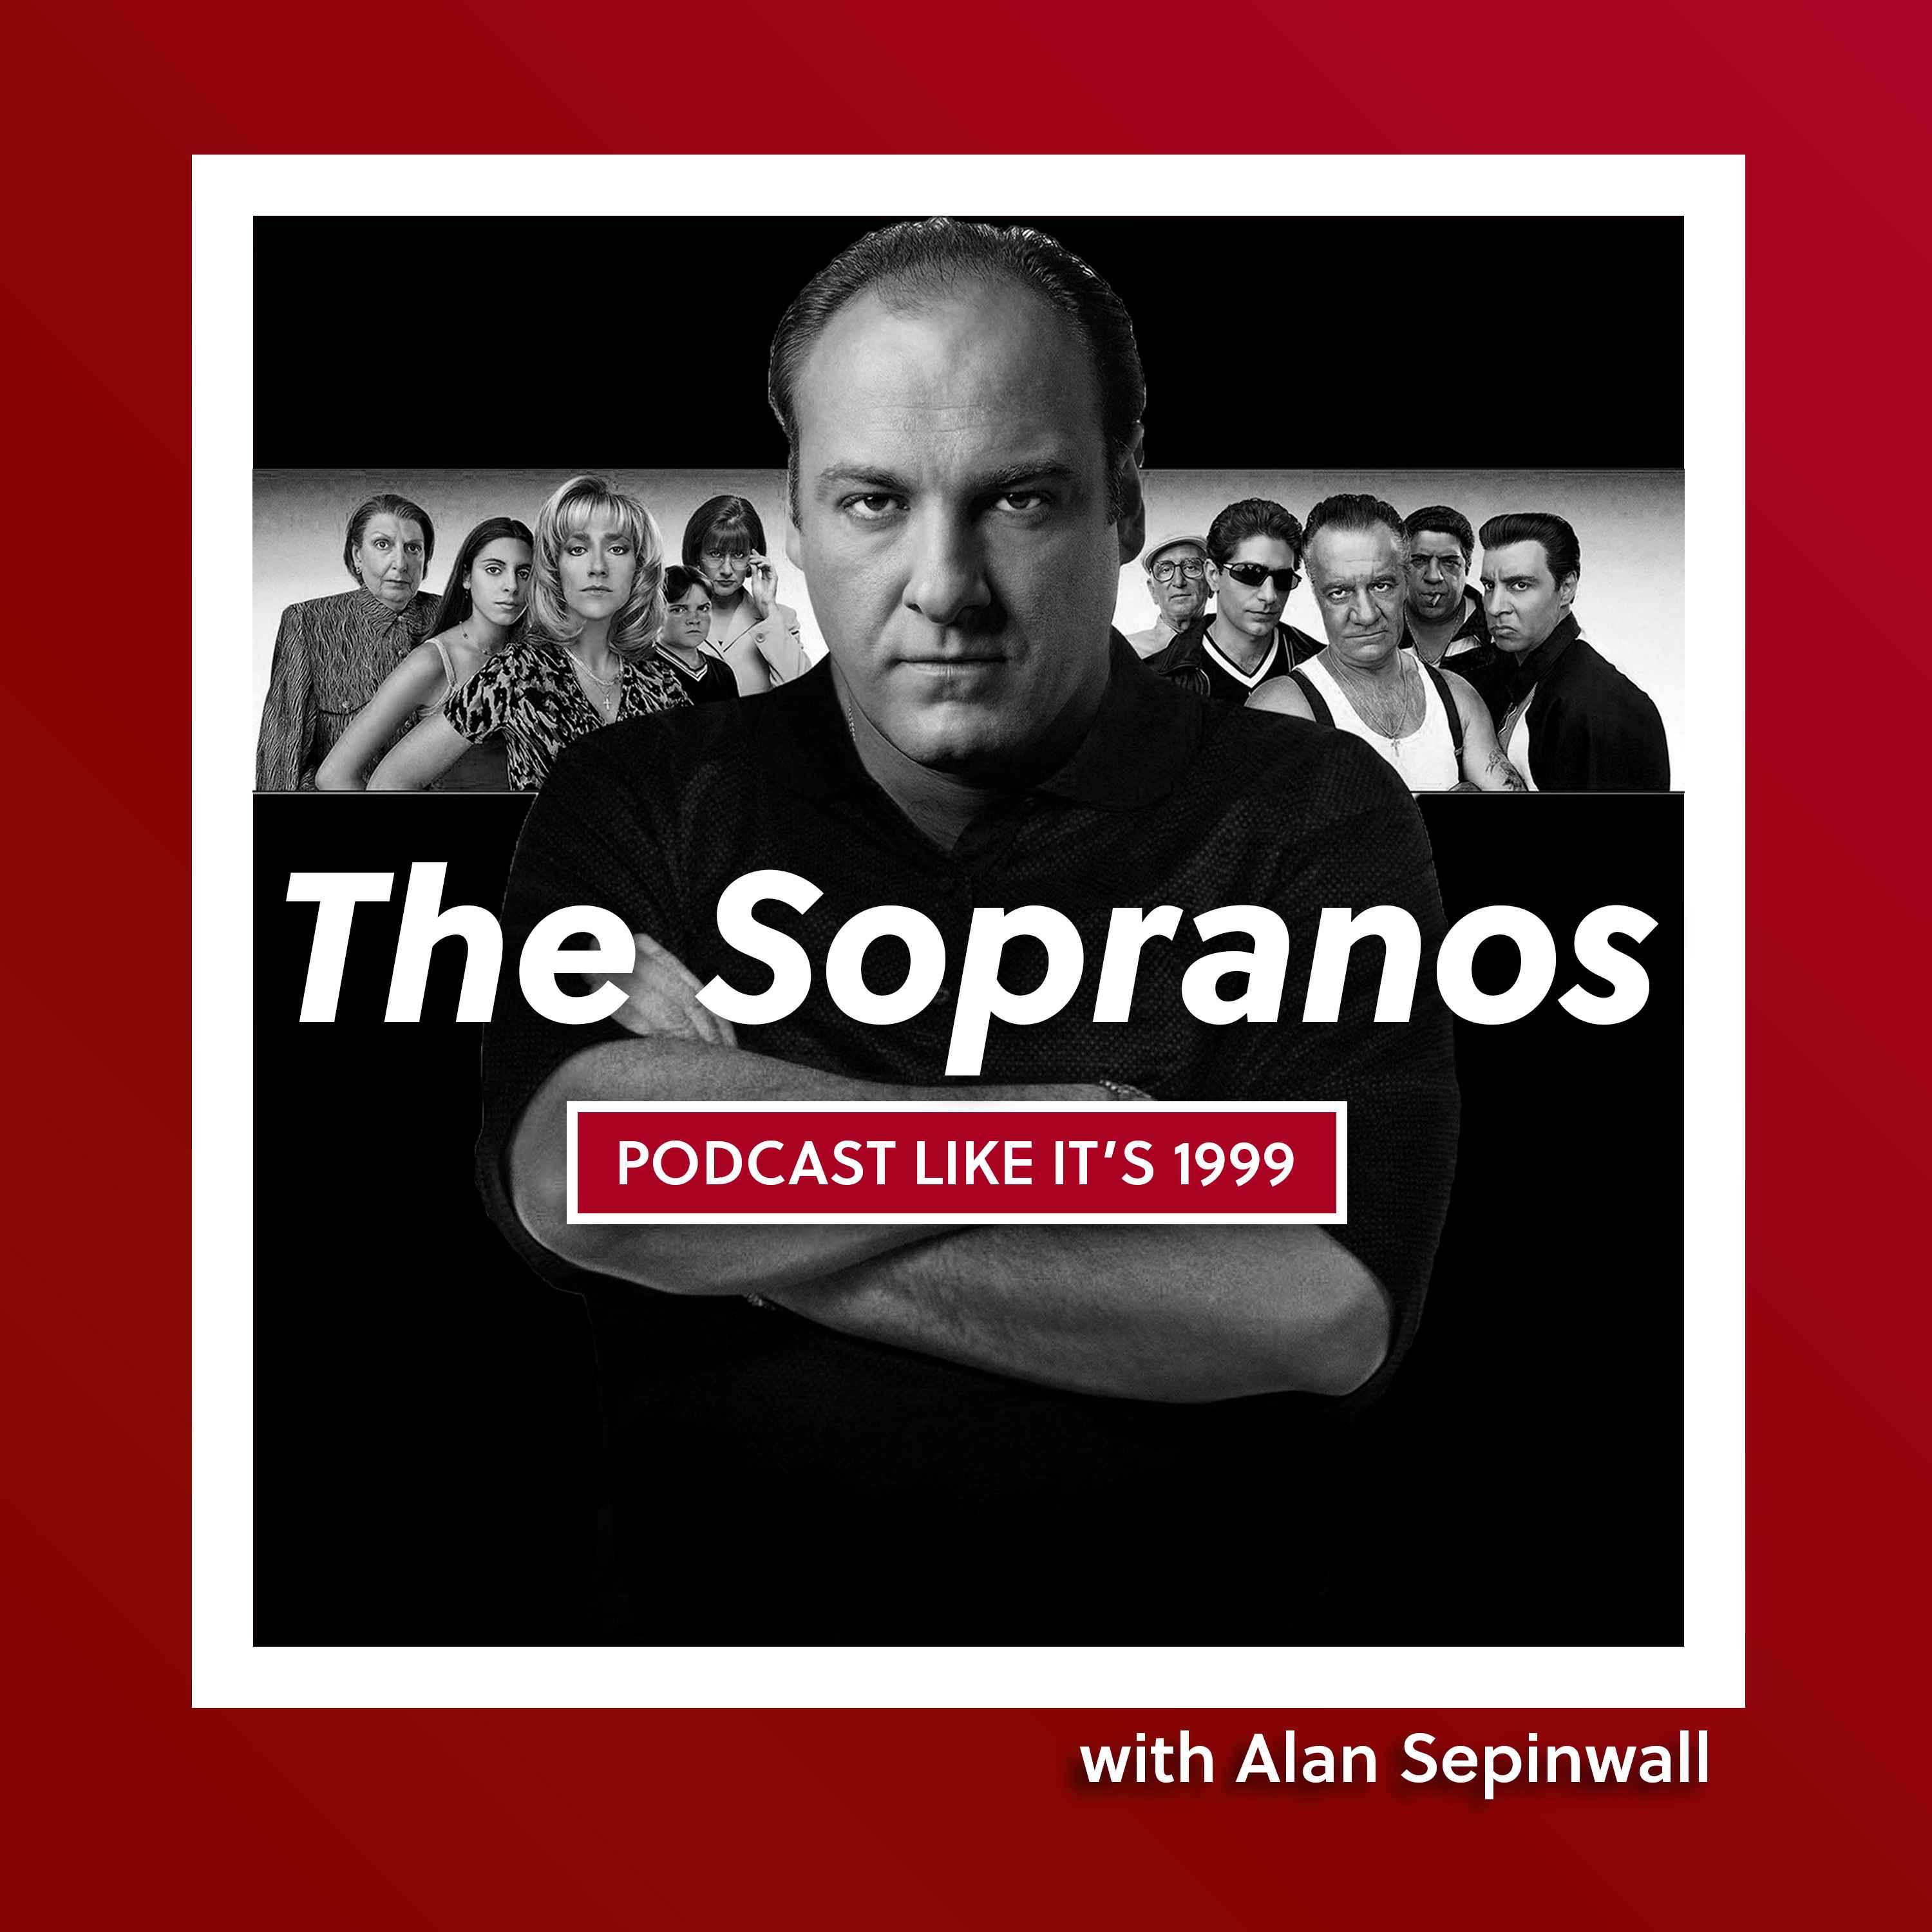 SOPRANOS SUNDAY: The Sopranos - with Alan Sepinwall